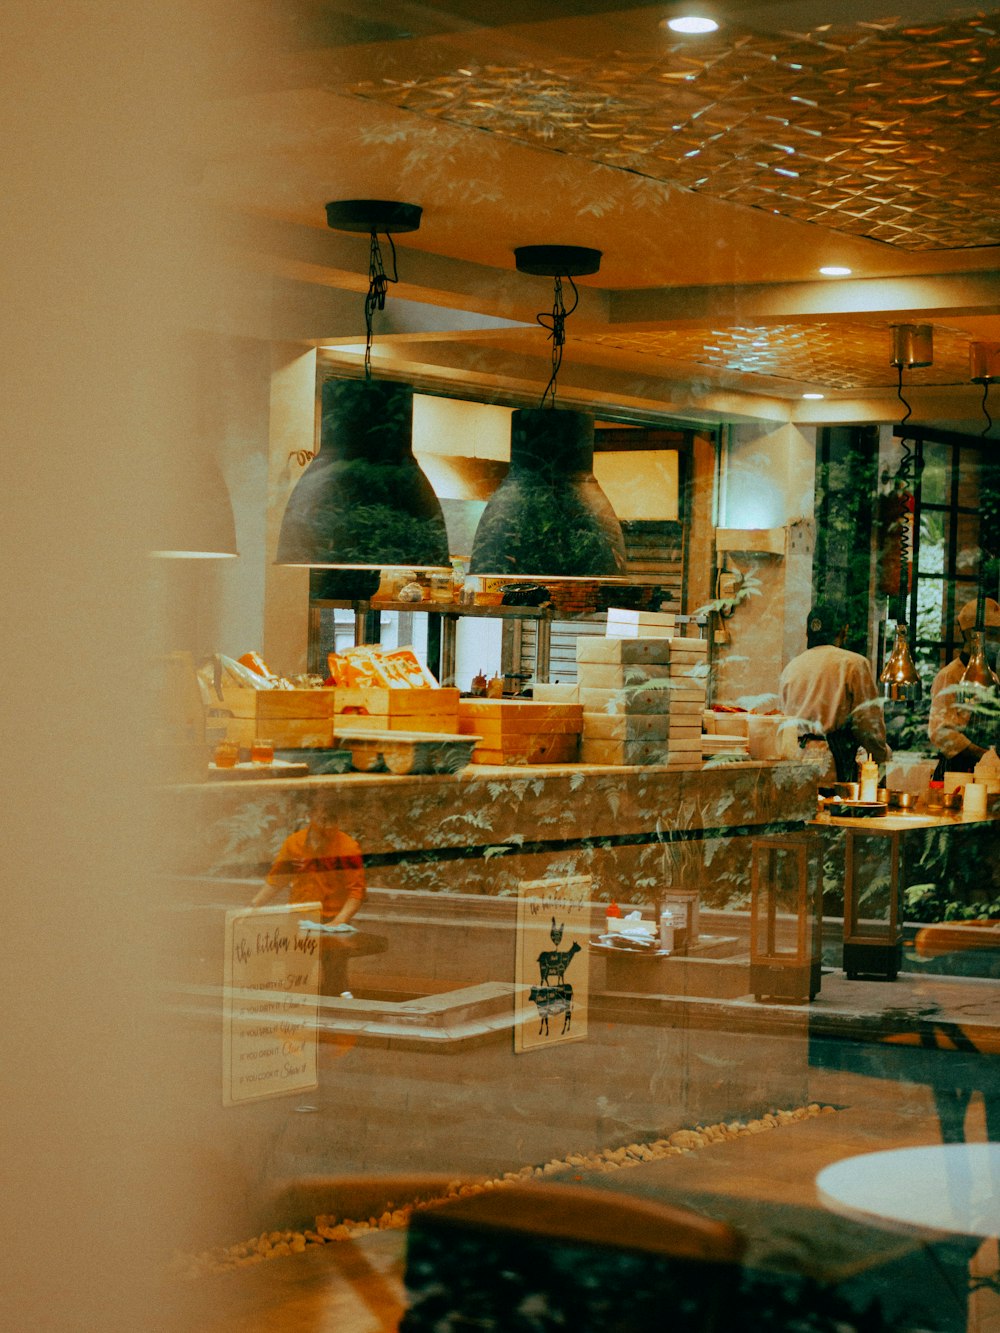 a view of a restaurant through a glass window